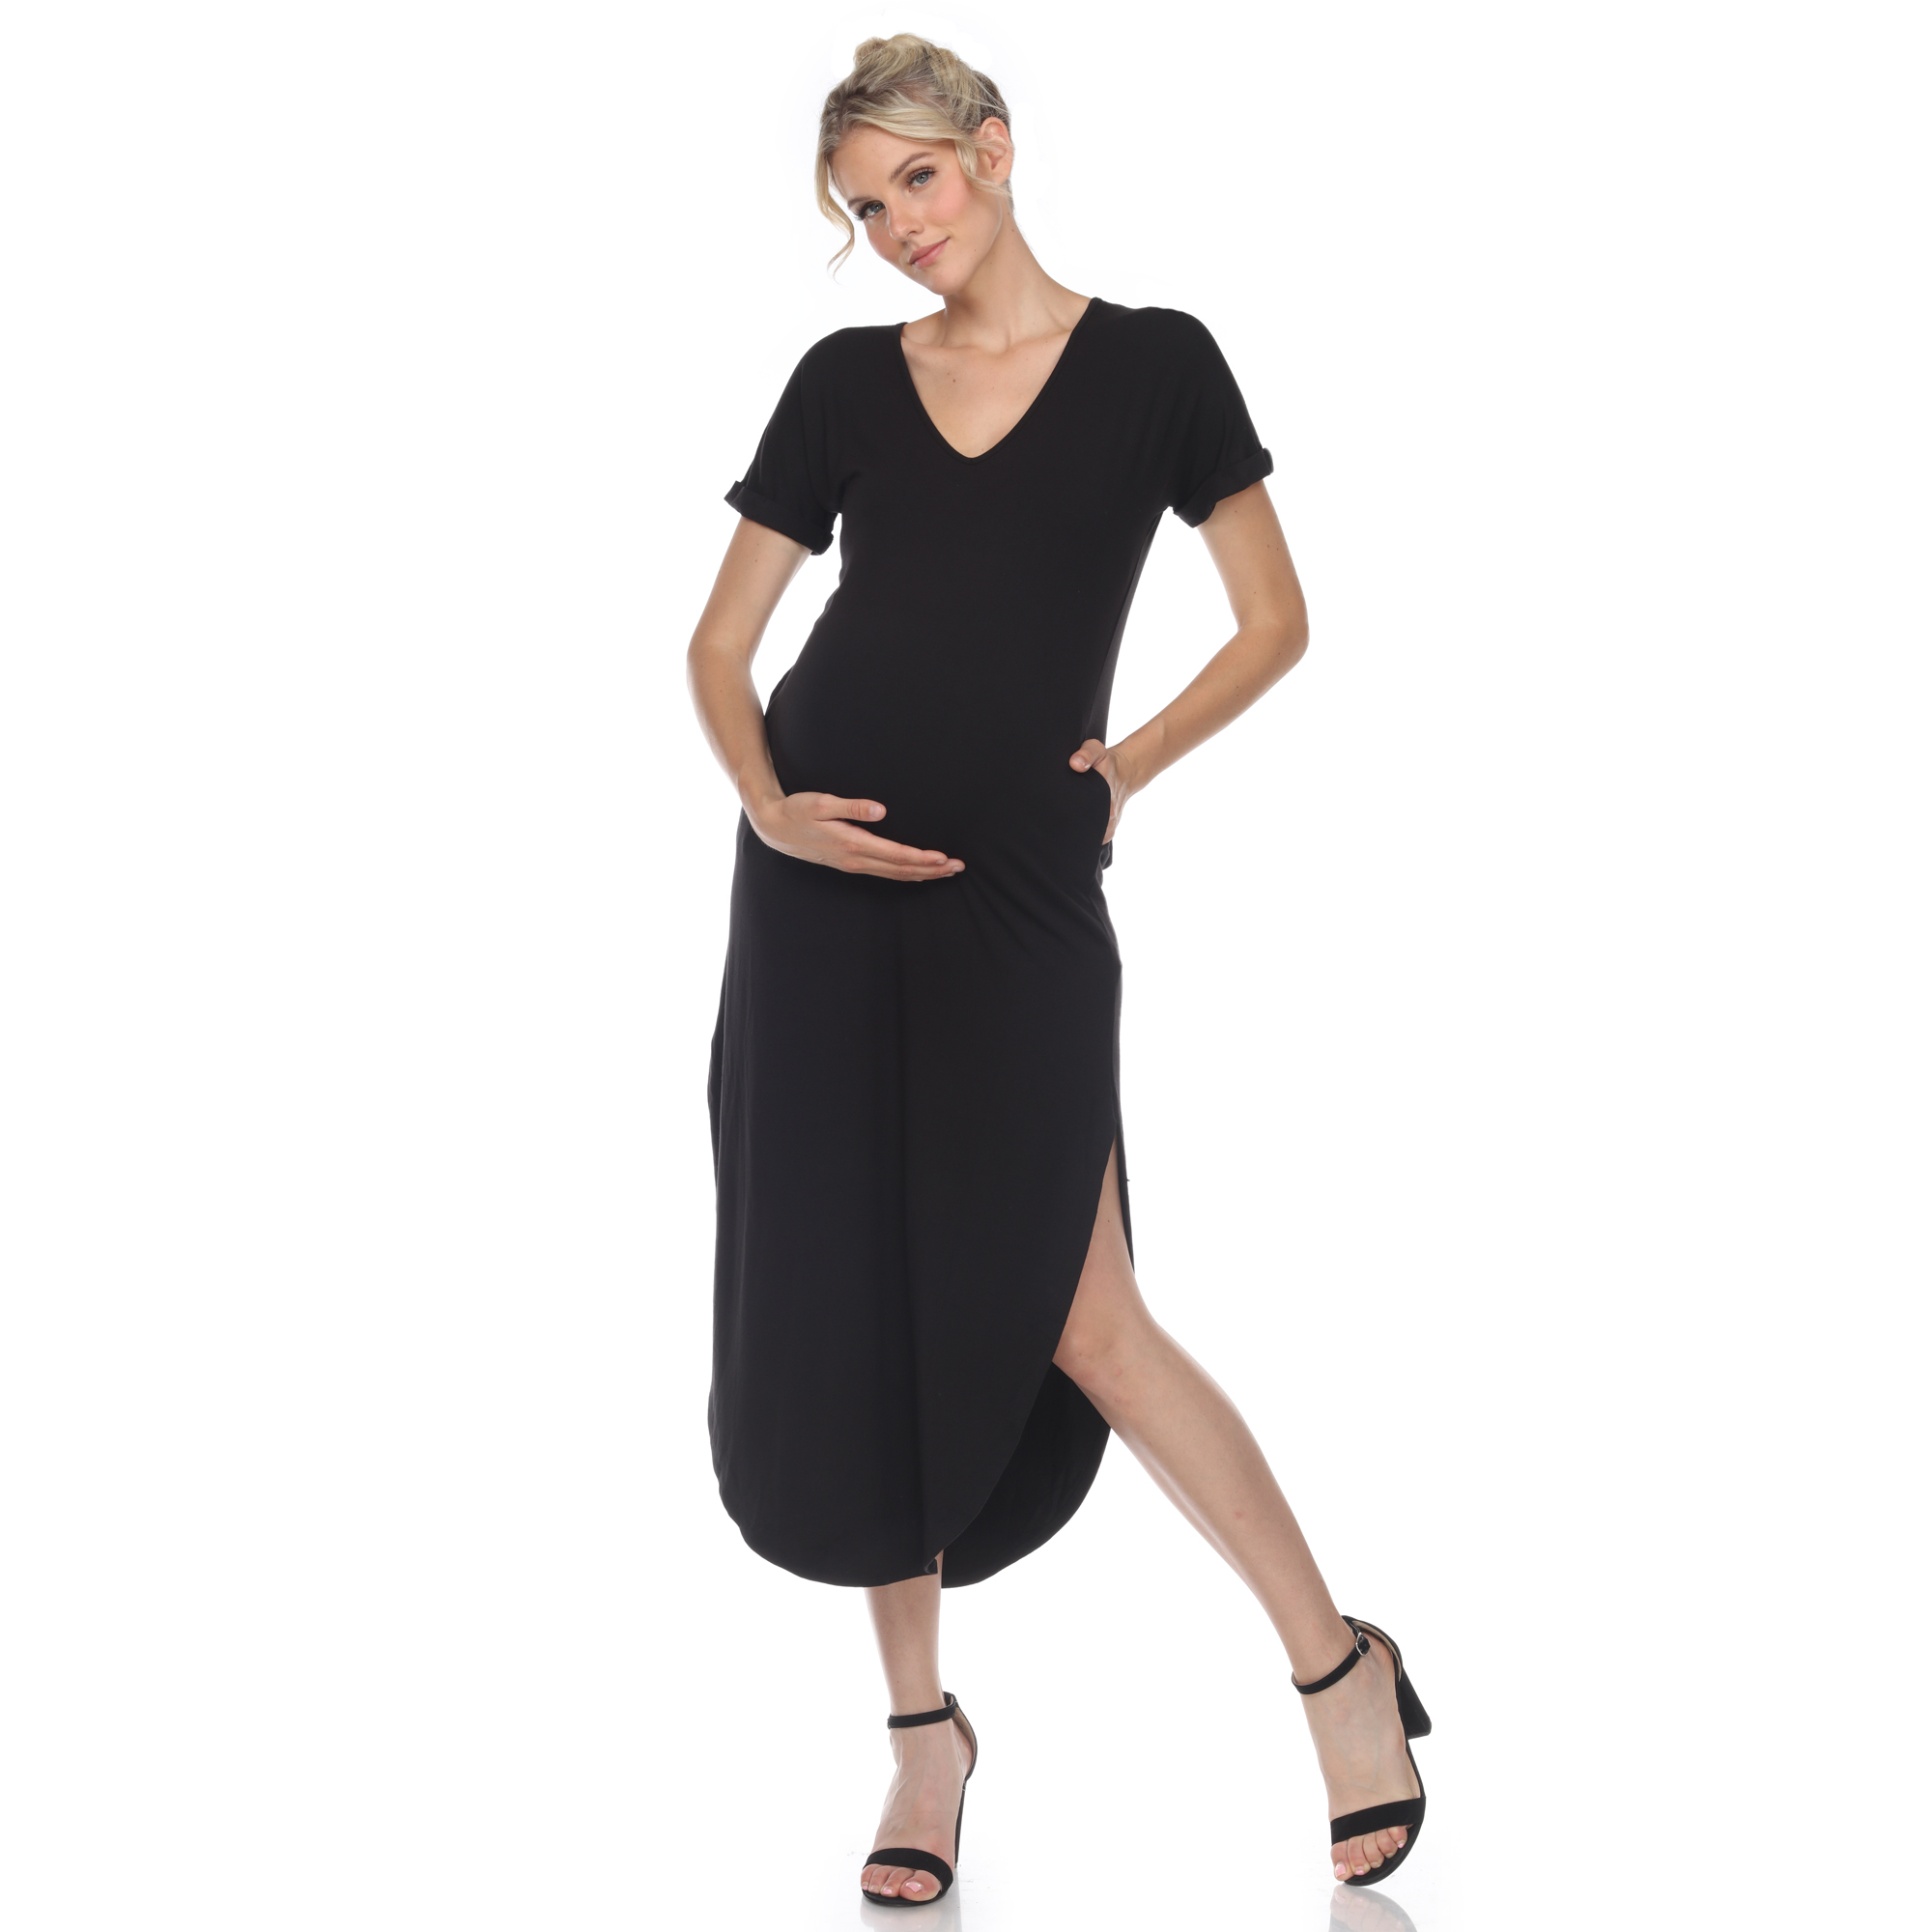 White Mark Womenâs Maternity V-neck Maxi Dress - Black, Small